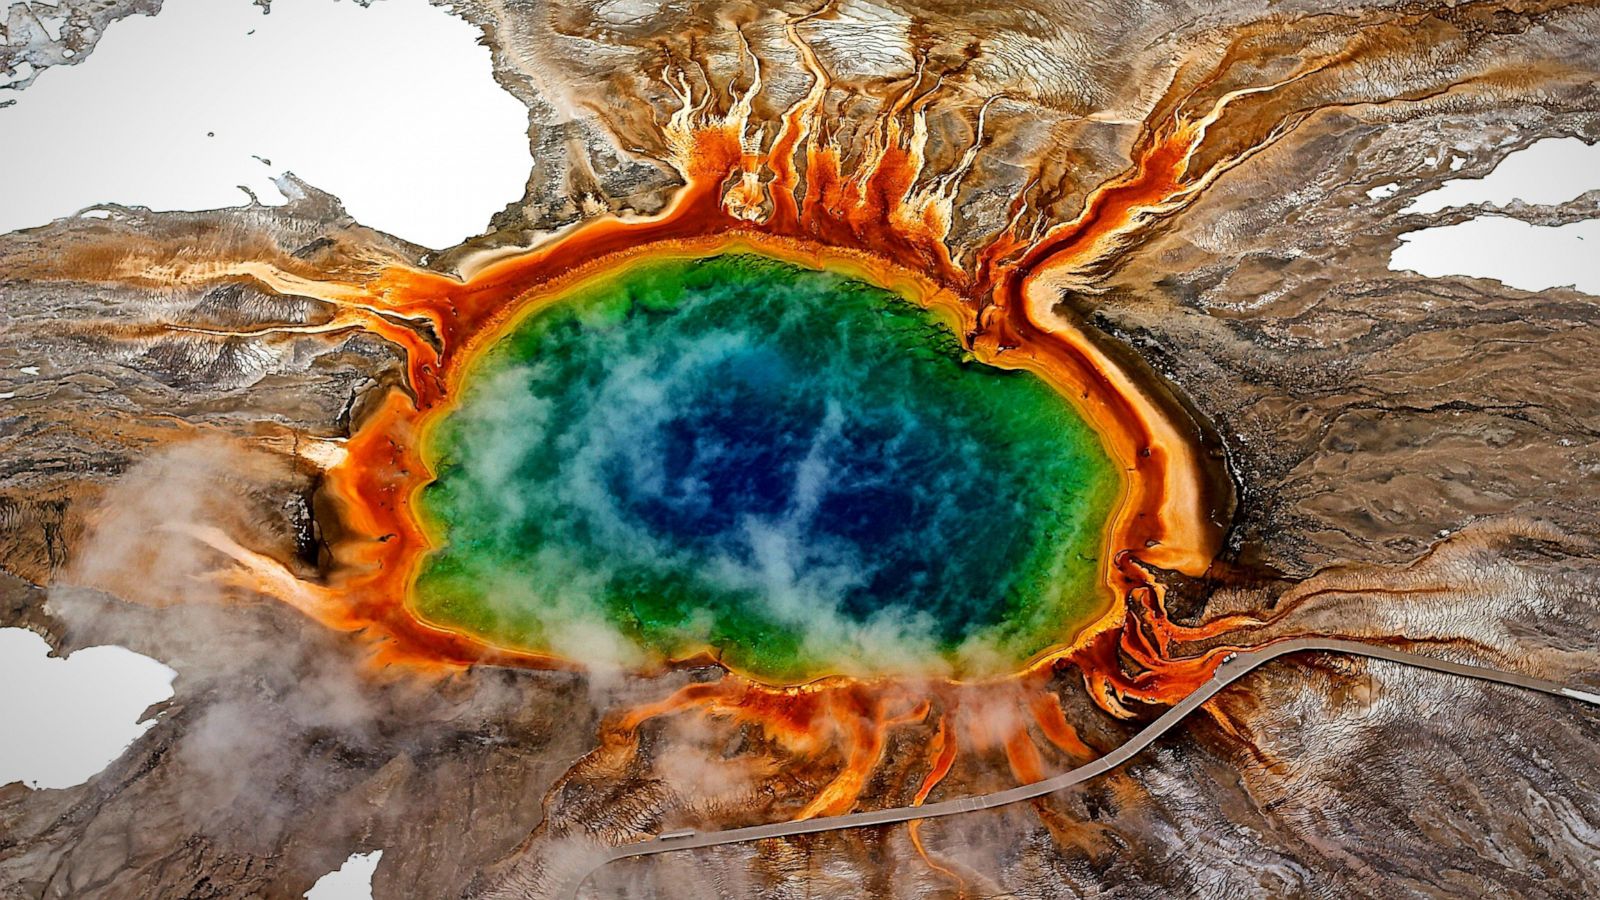 Natural Landmarks Quiz The Grand Prismatic Spring, Yellowstone National Park Caldera, Wyoming